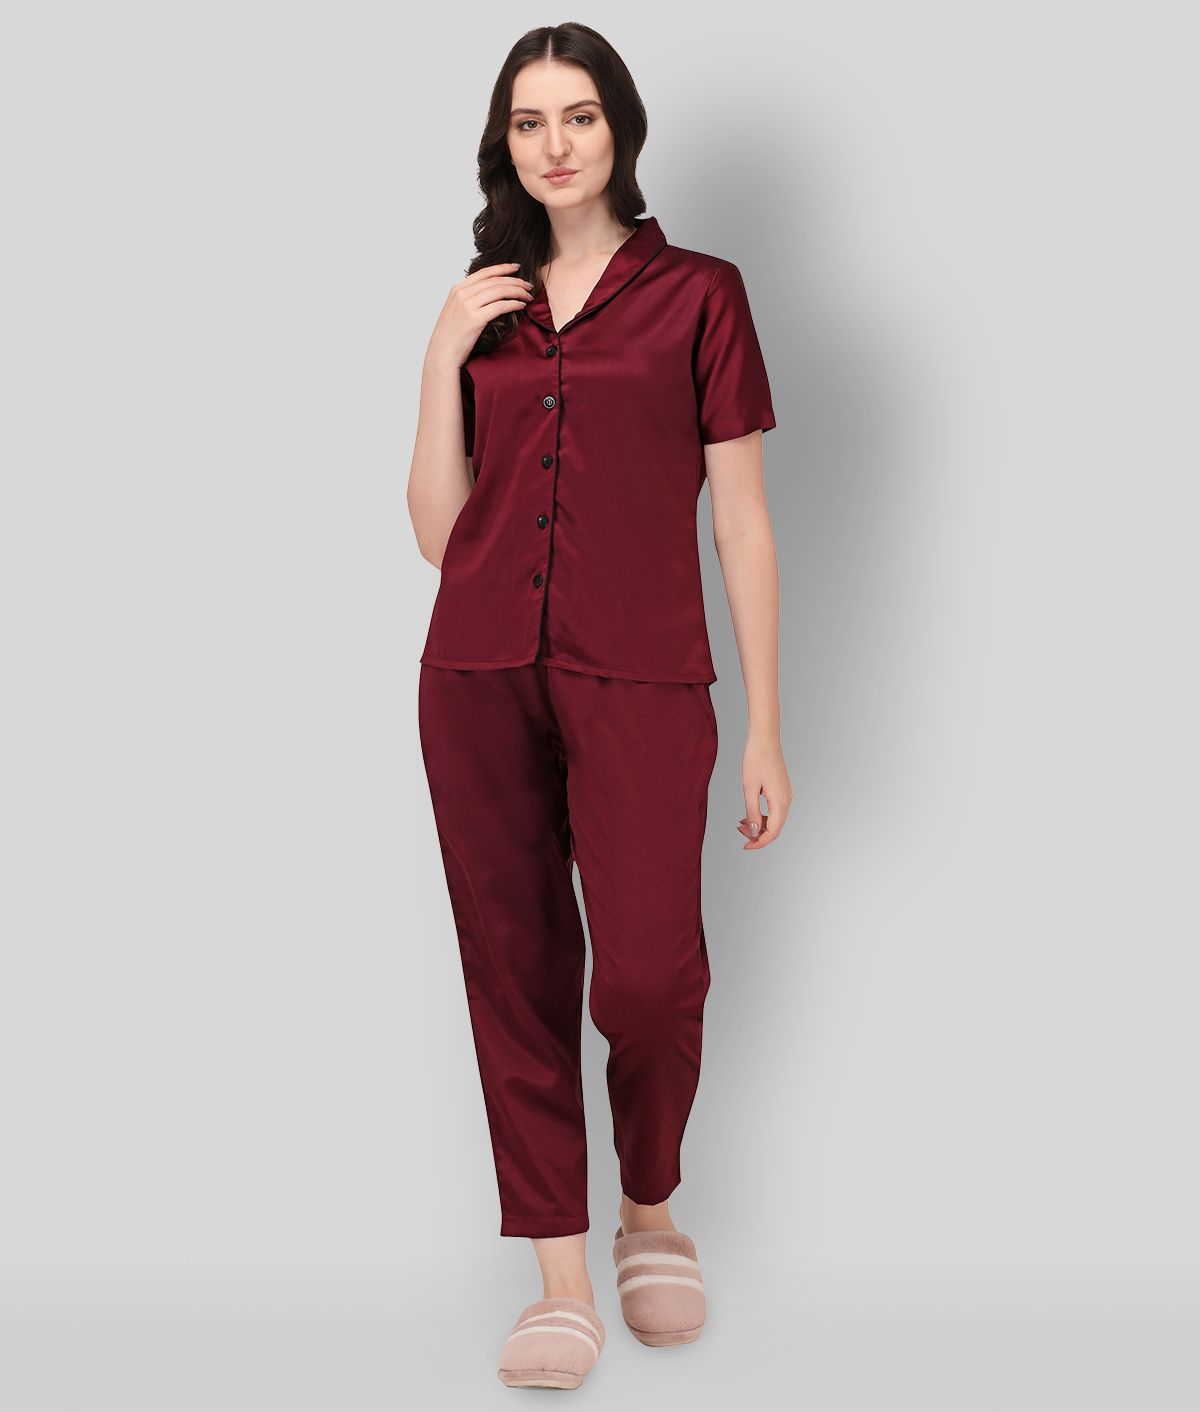     			Smarty Pants - Maroon Silk Women's Nightwear Nightsuit Sets ( Pack of 1 )